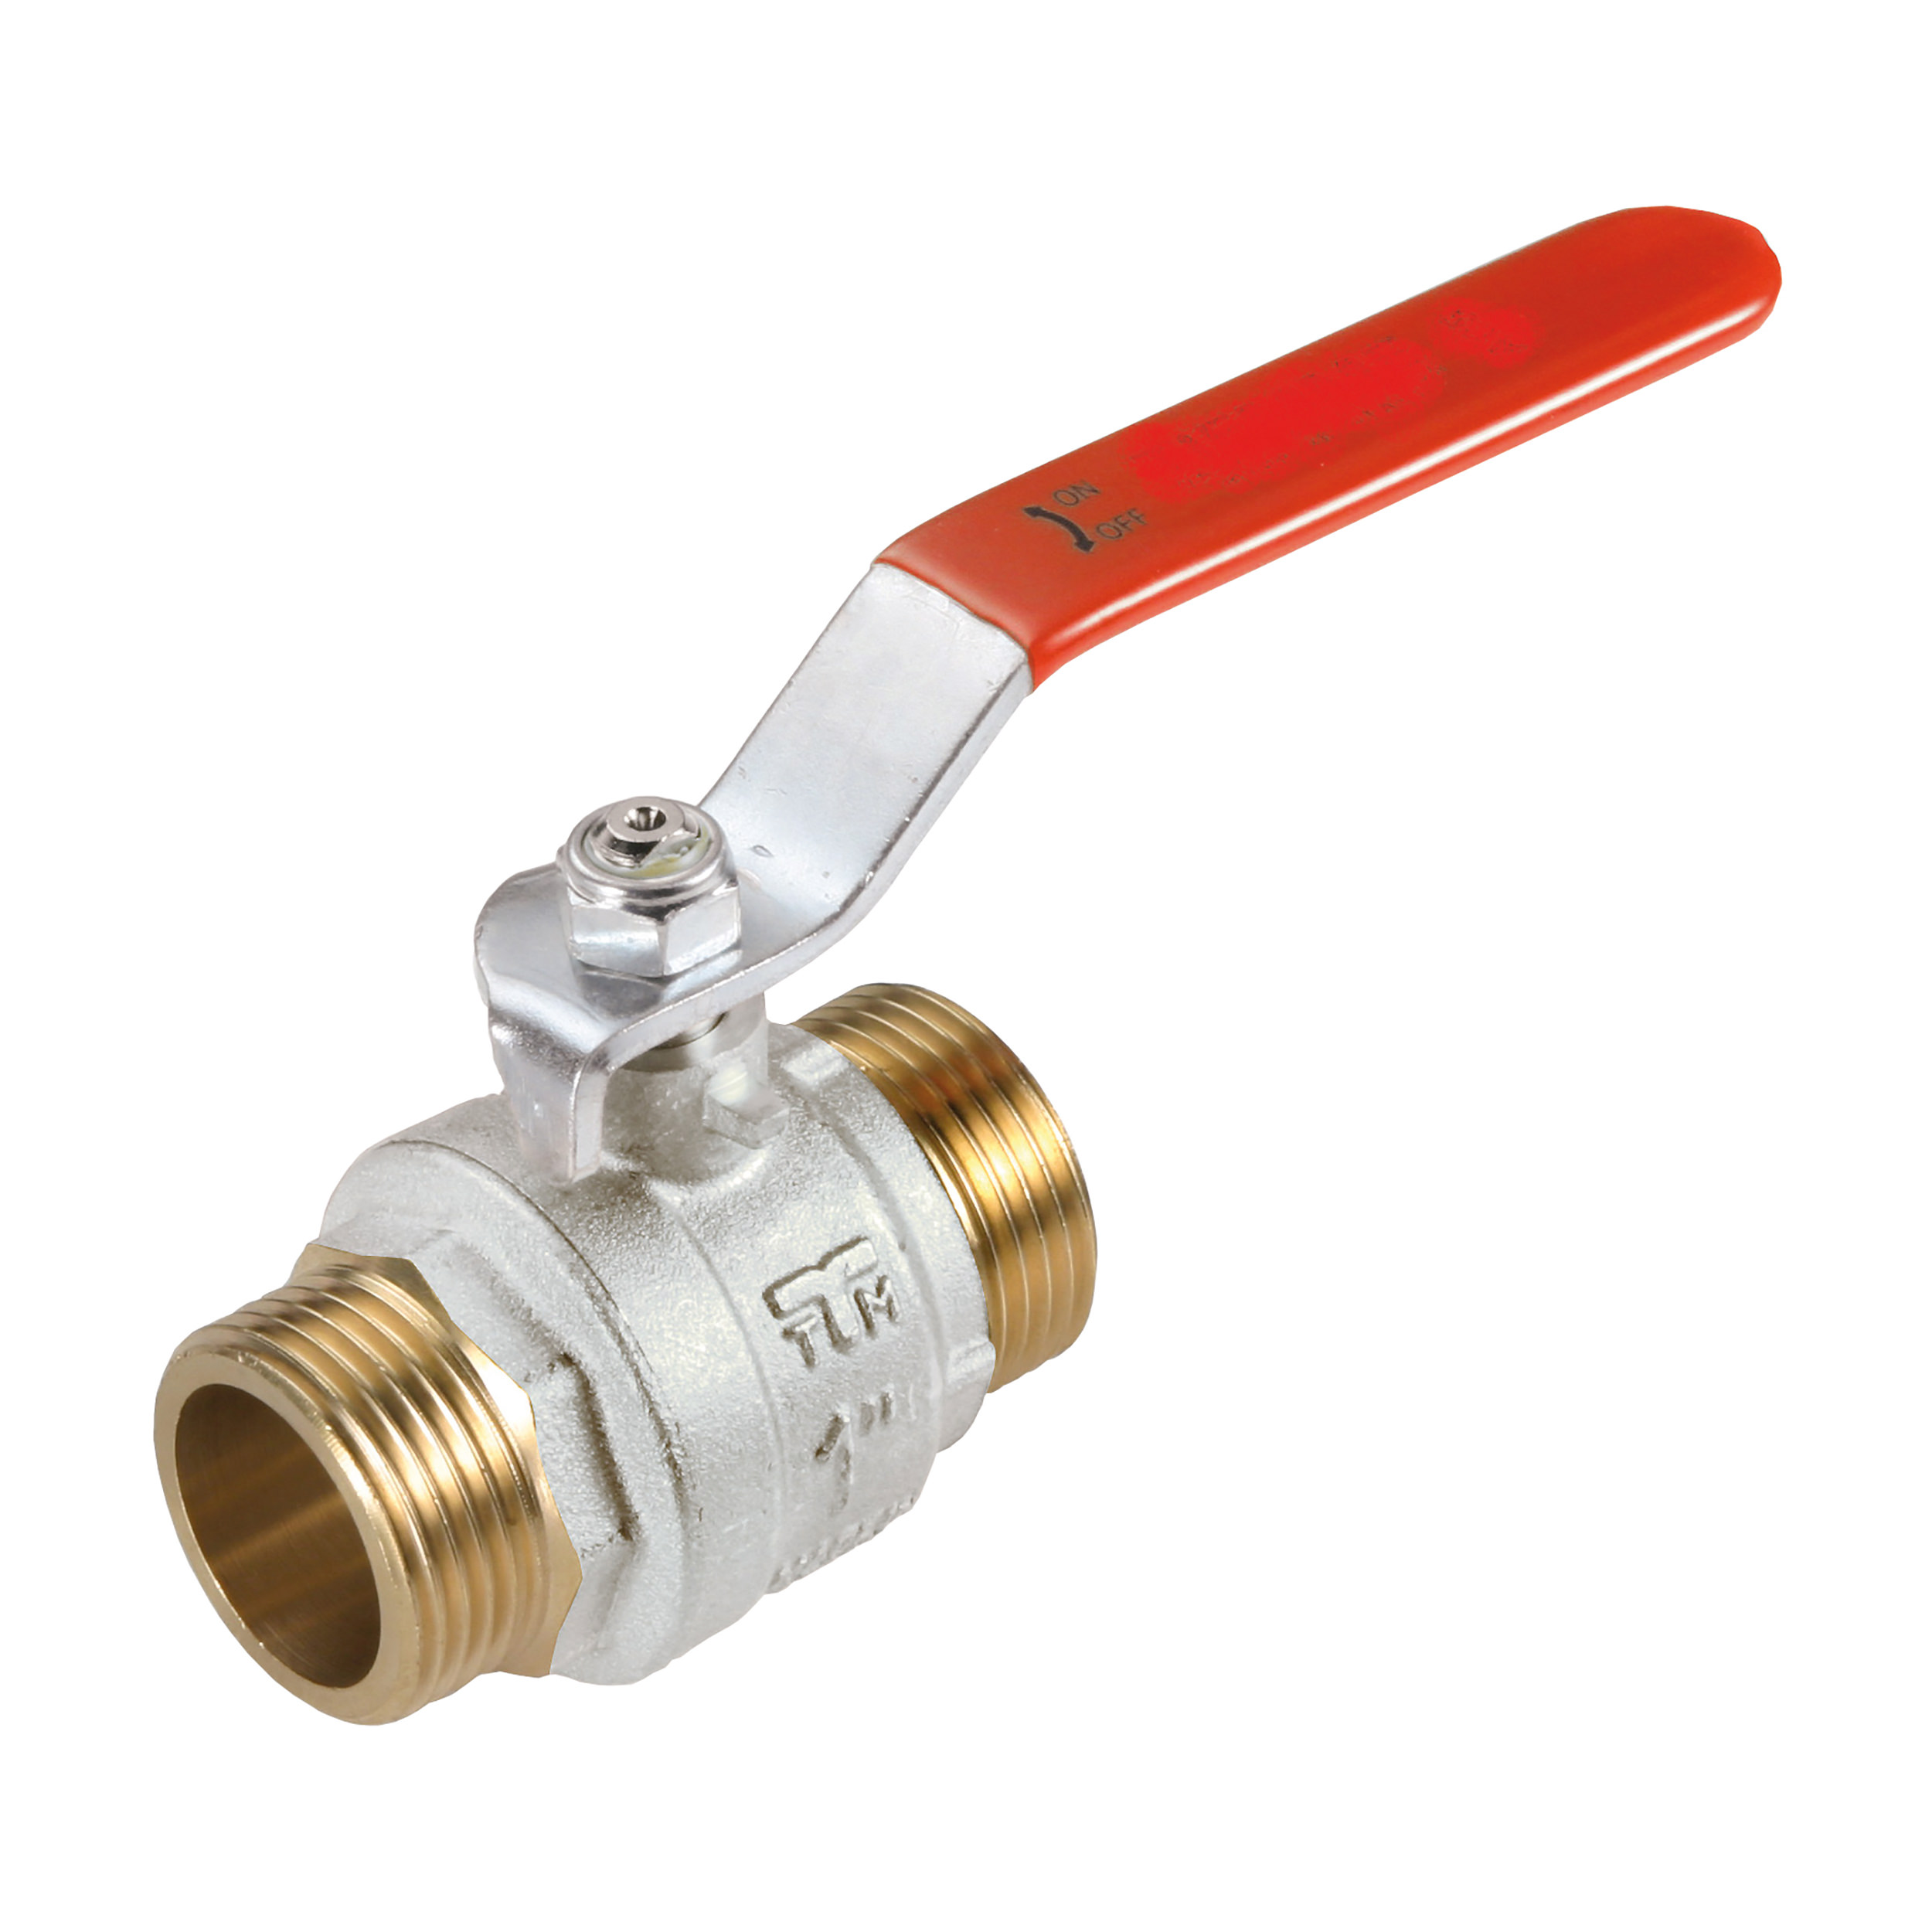 Ball valve, metal handle, full flow, max. operating pressure 435 psi, length: 56 mm, AF 23mm, DN 10, G⅜ m–m, t1/t2: 11 mm